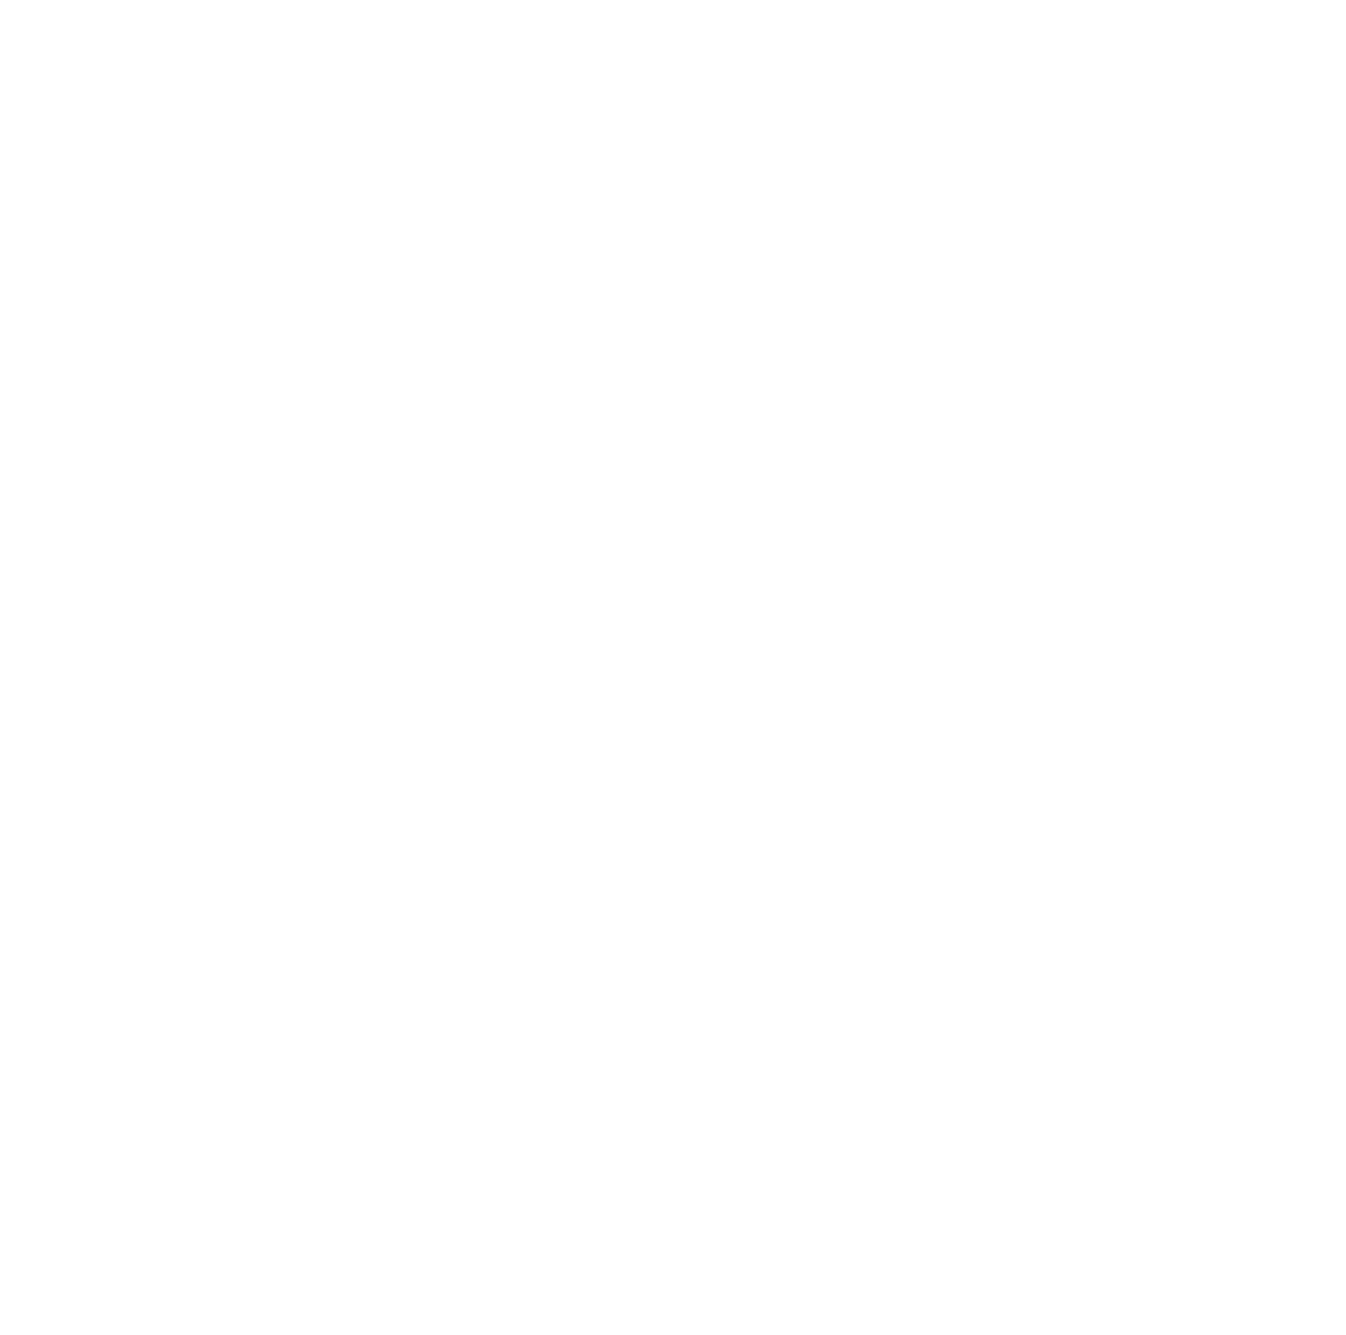 Star Hostel Taichung Parklane